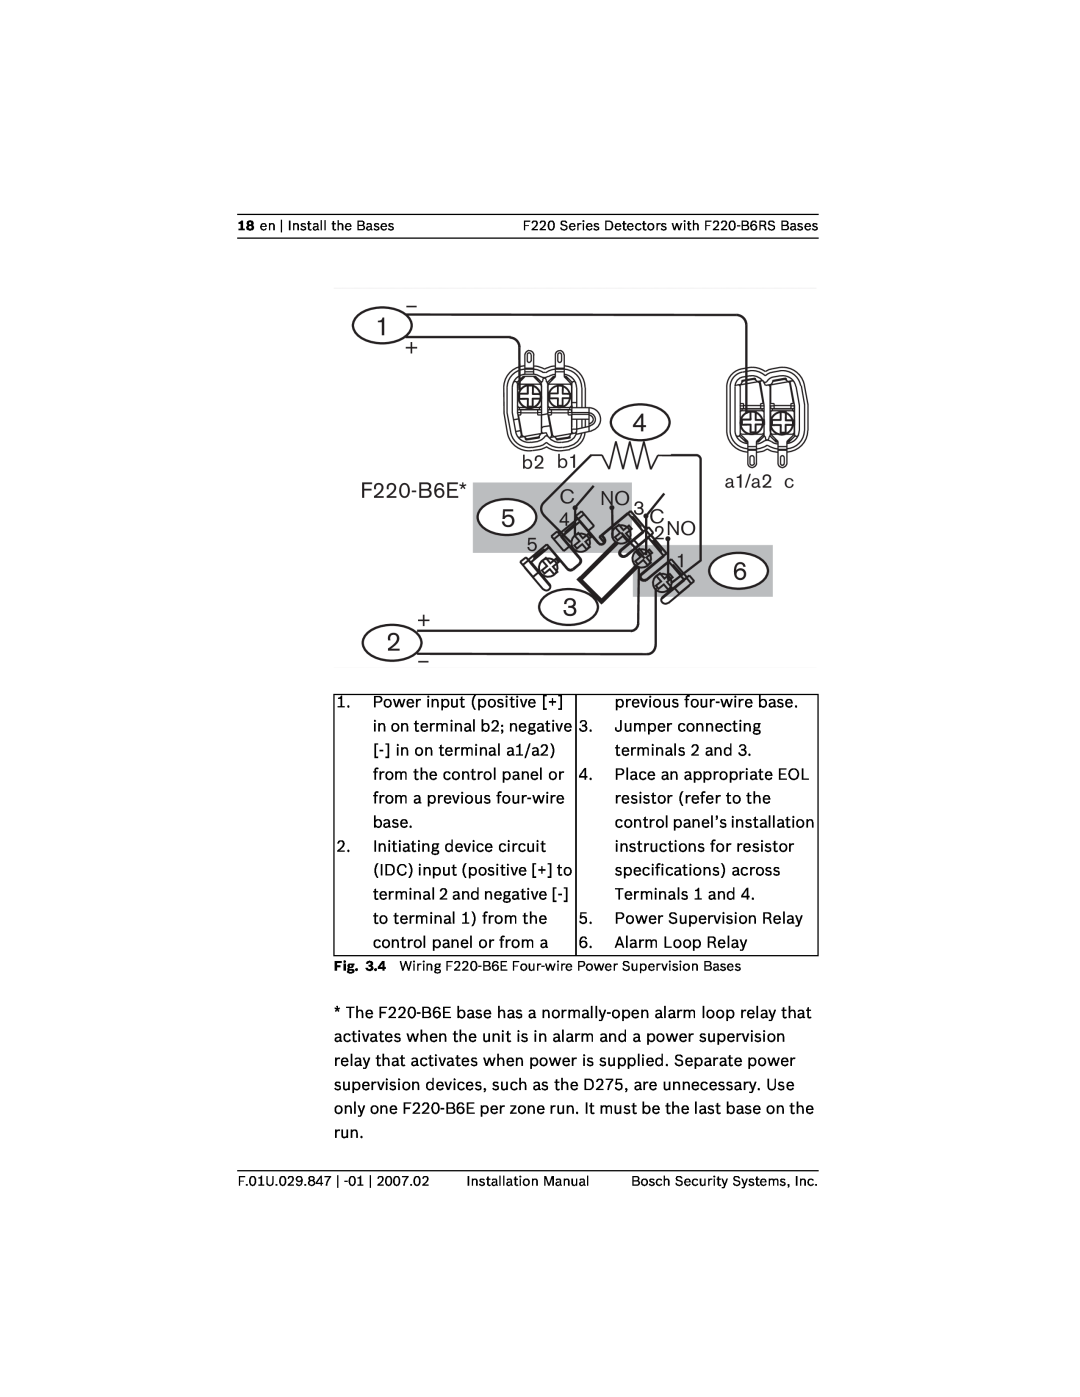 Bosch Appliances F220-B6RS installation manual F220-B6E, a1/a2 